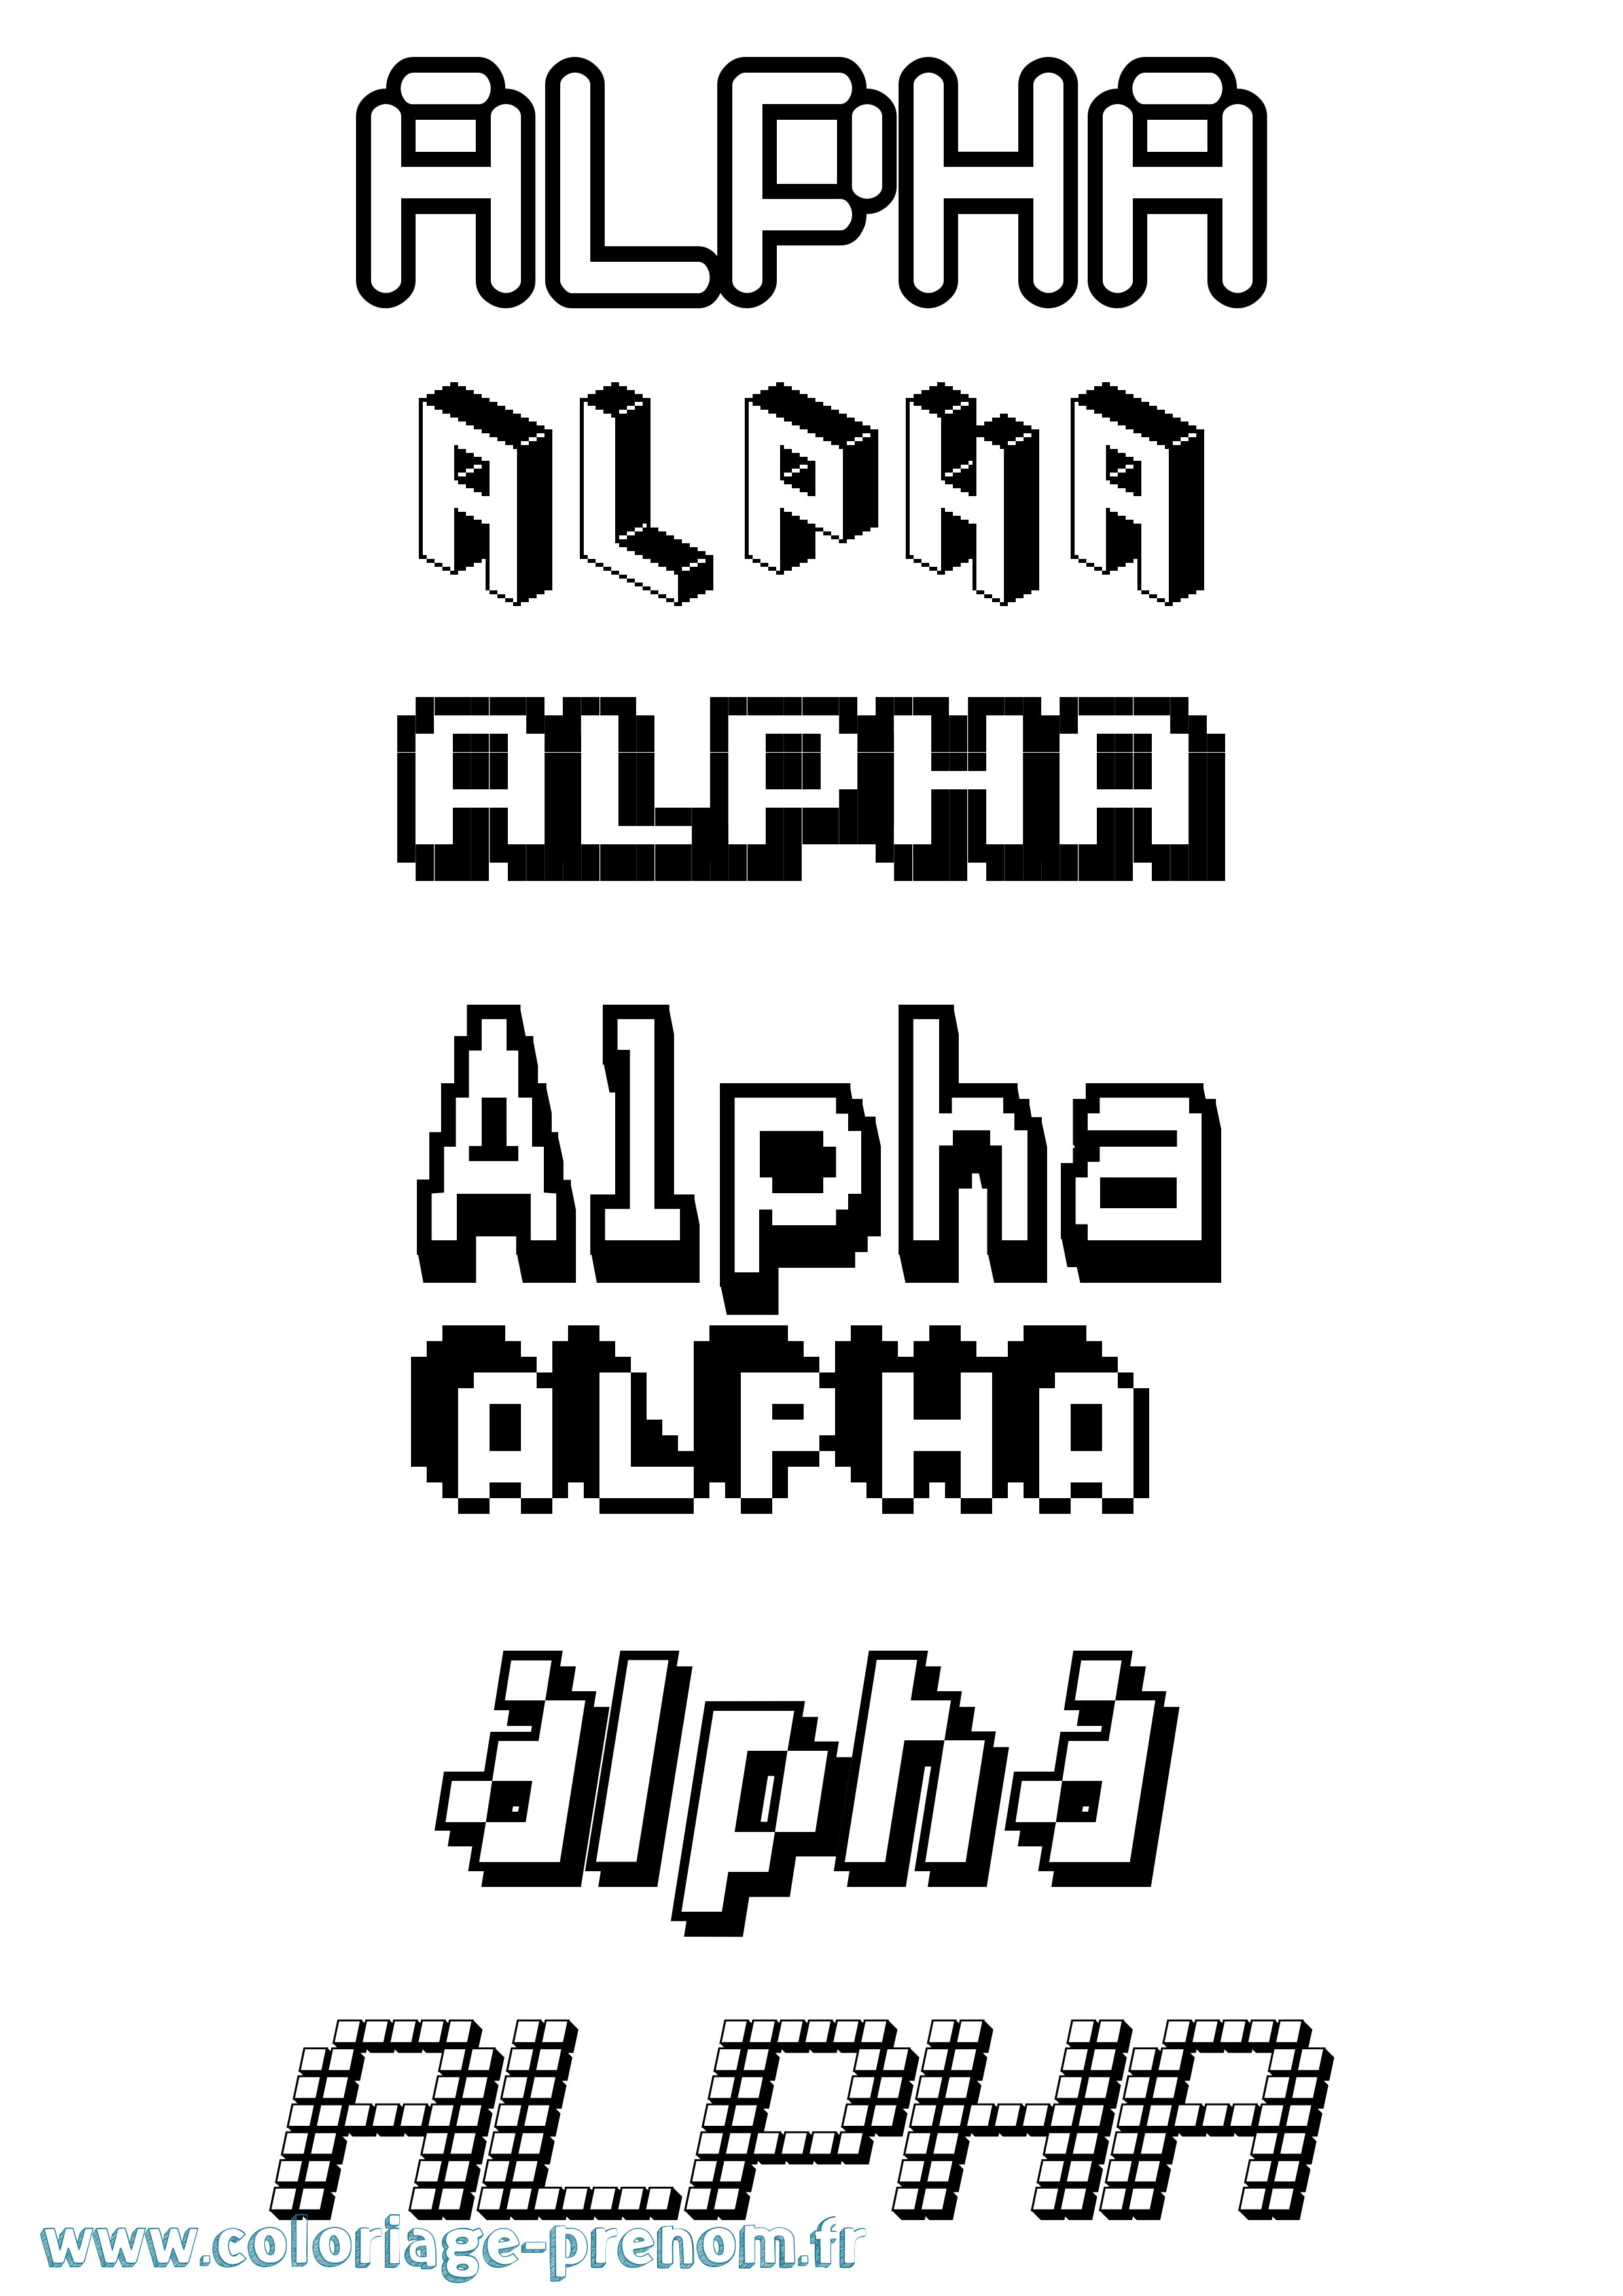 Coloriage prénom Alpha Pixel